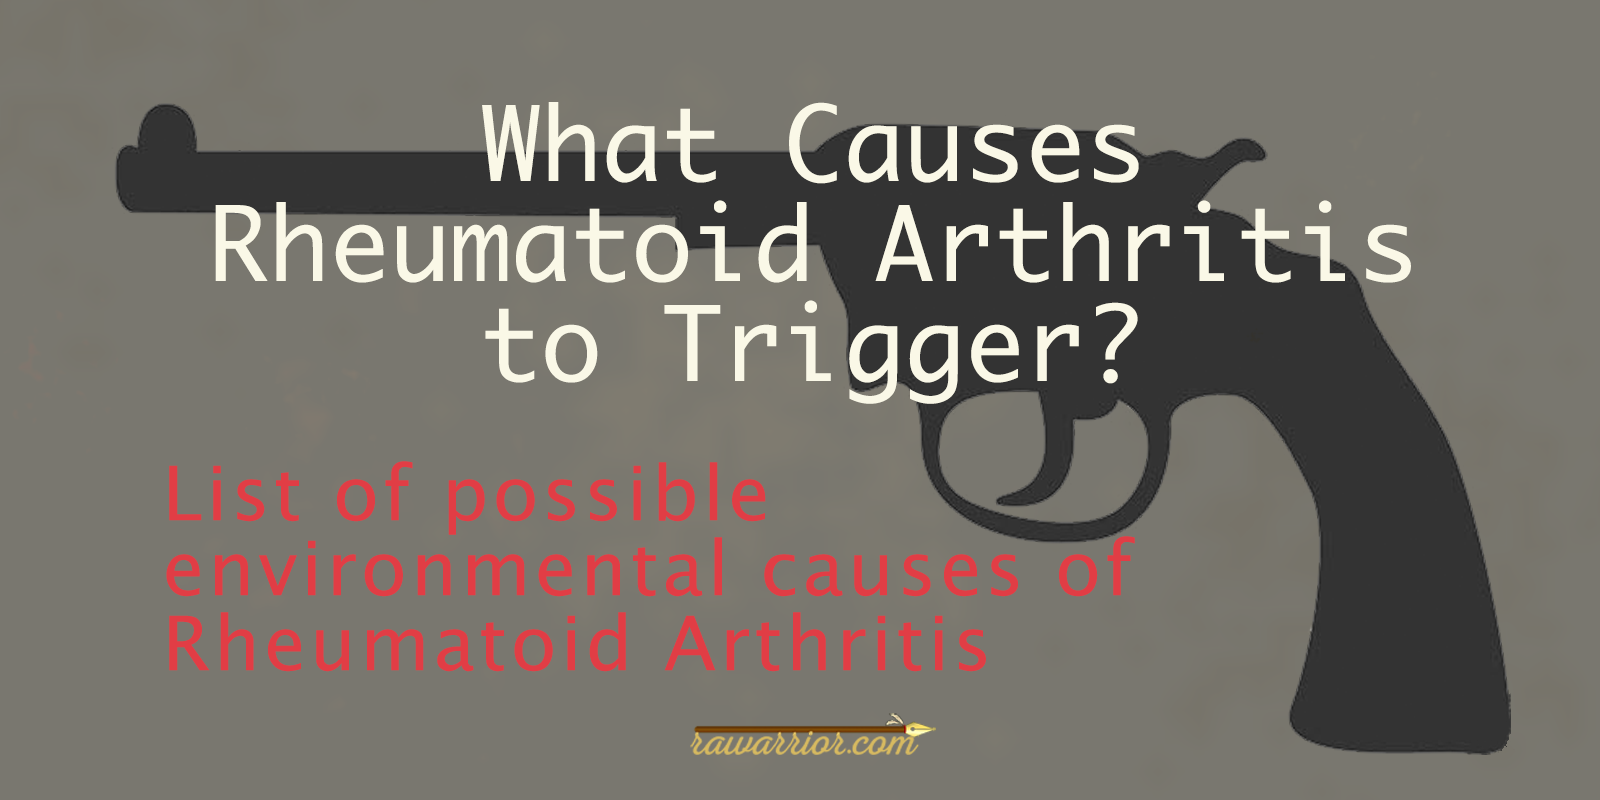 what causes rheumatoid arthritis trigger